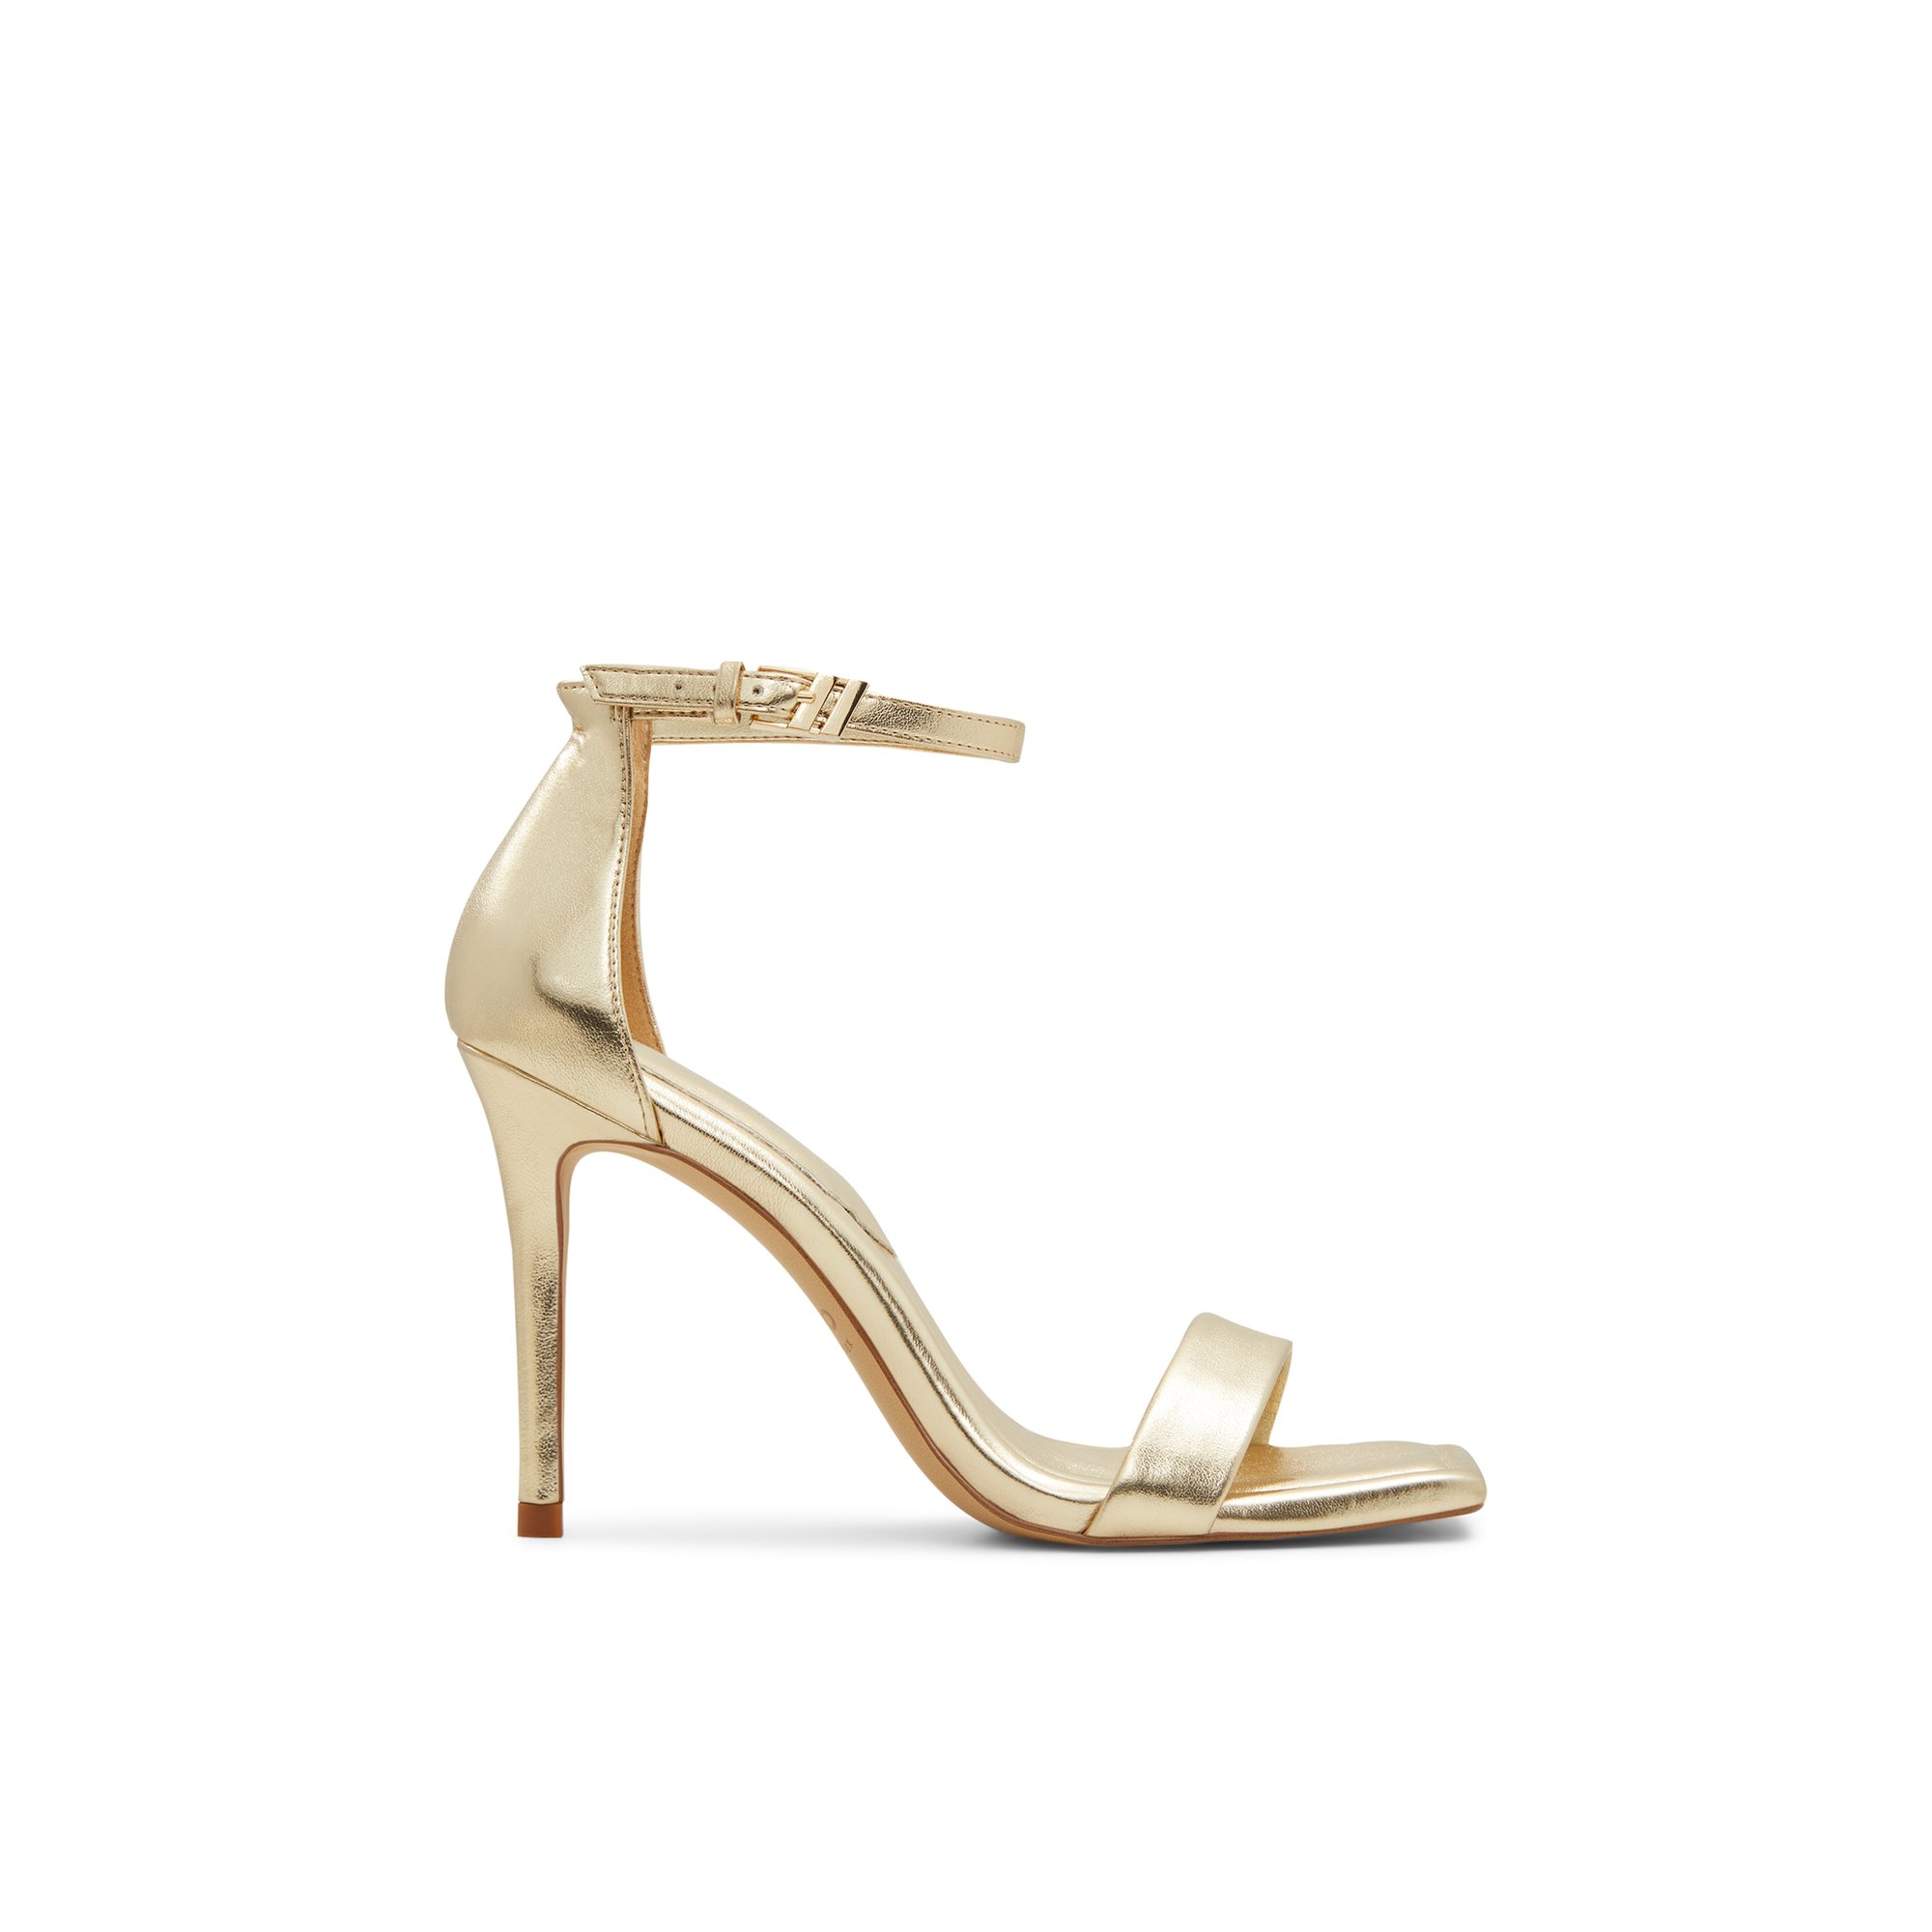 ALDO Renza - Women's Heeled Sandal Sandals - Gold